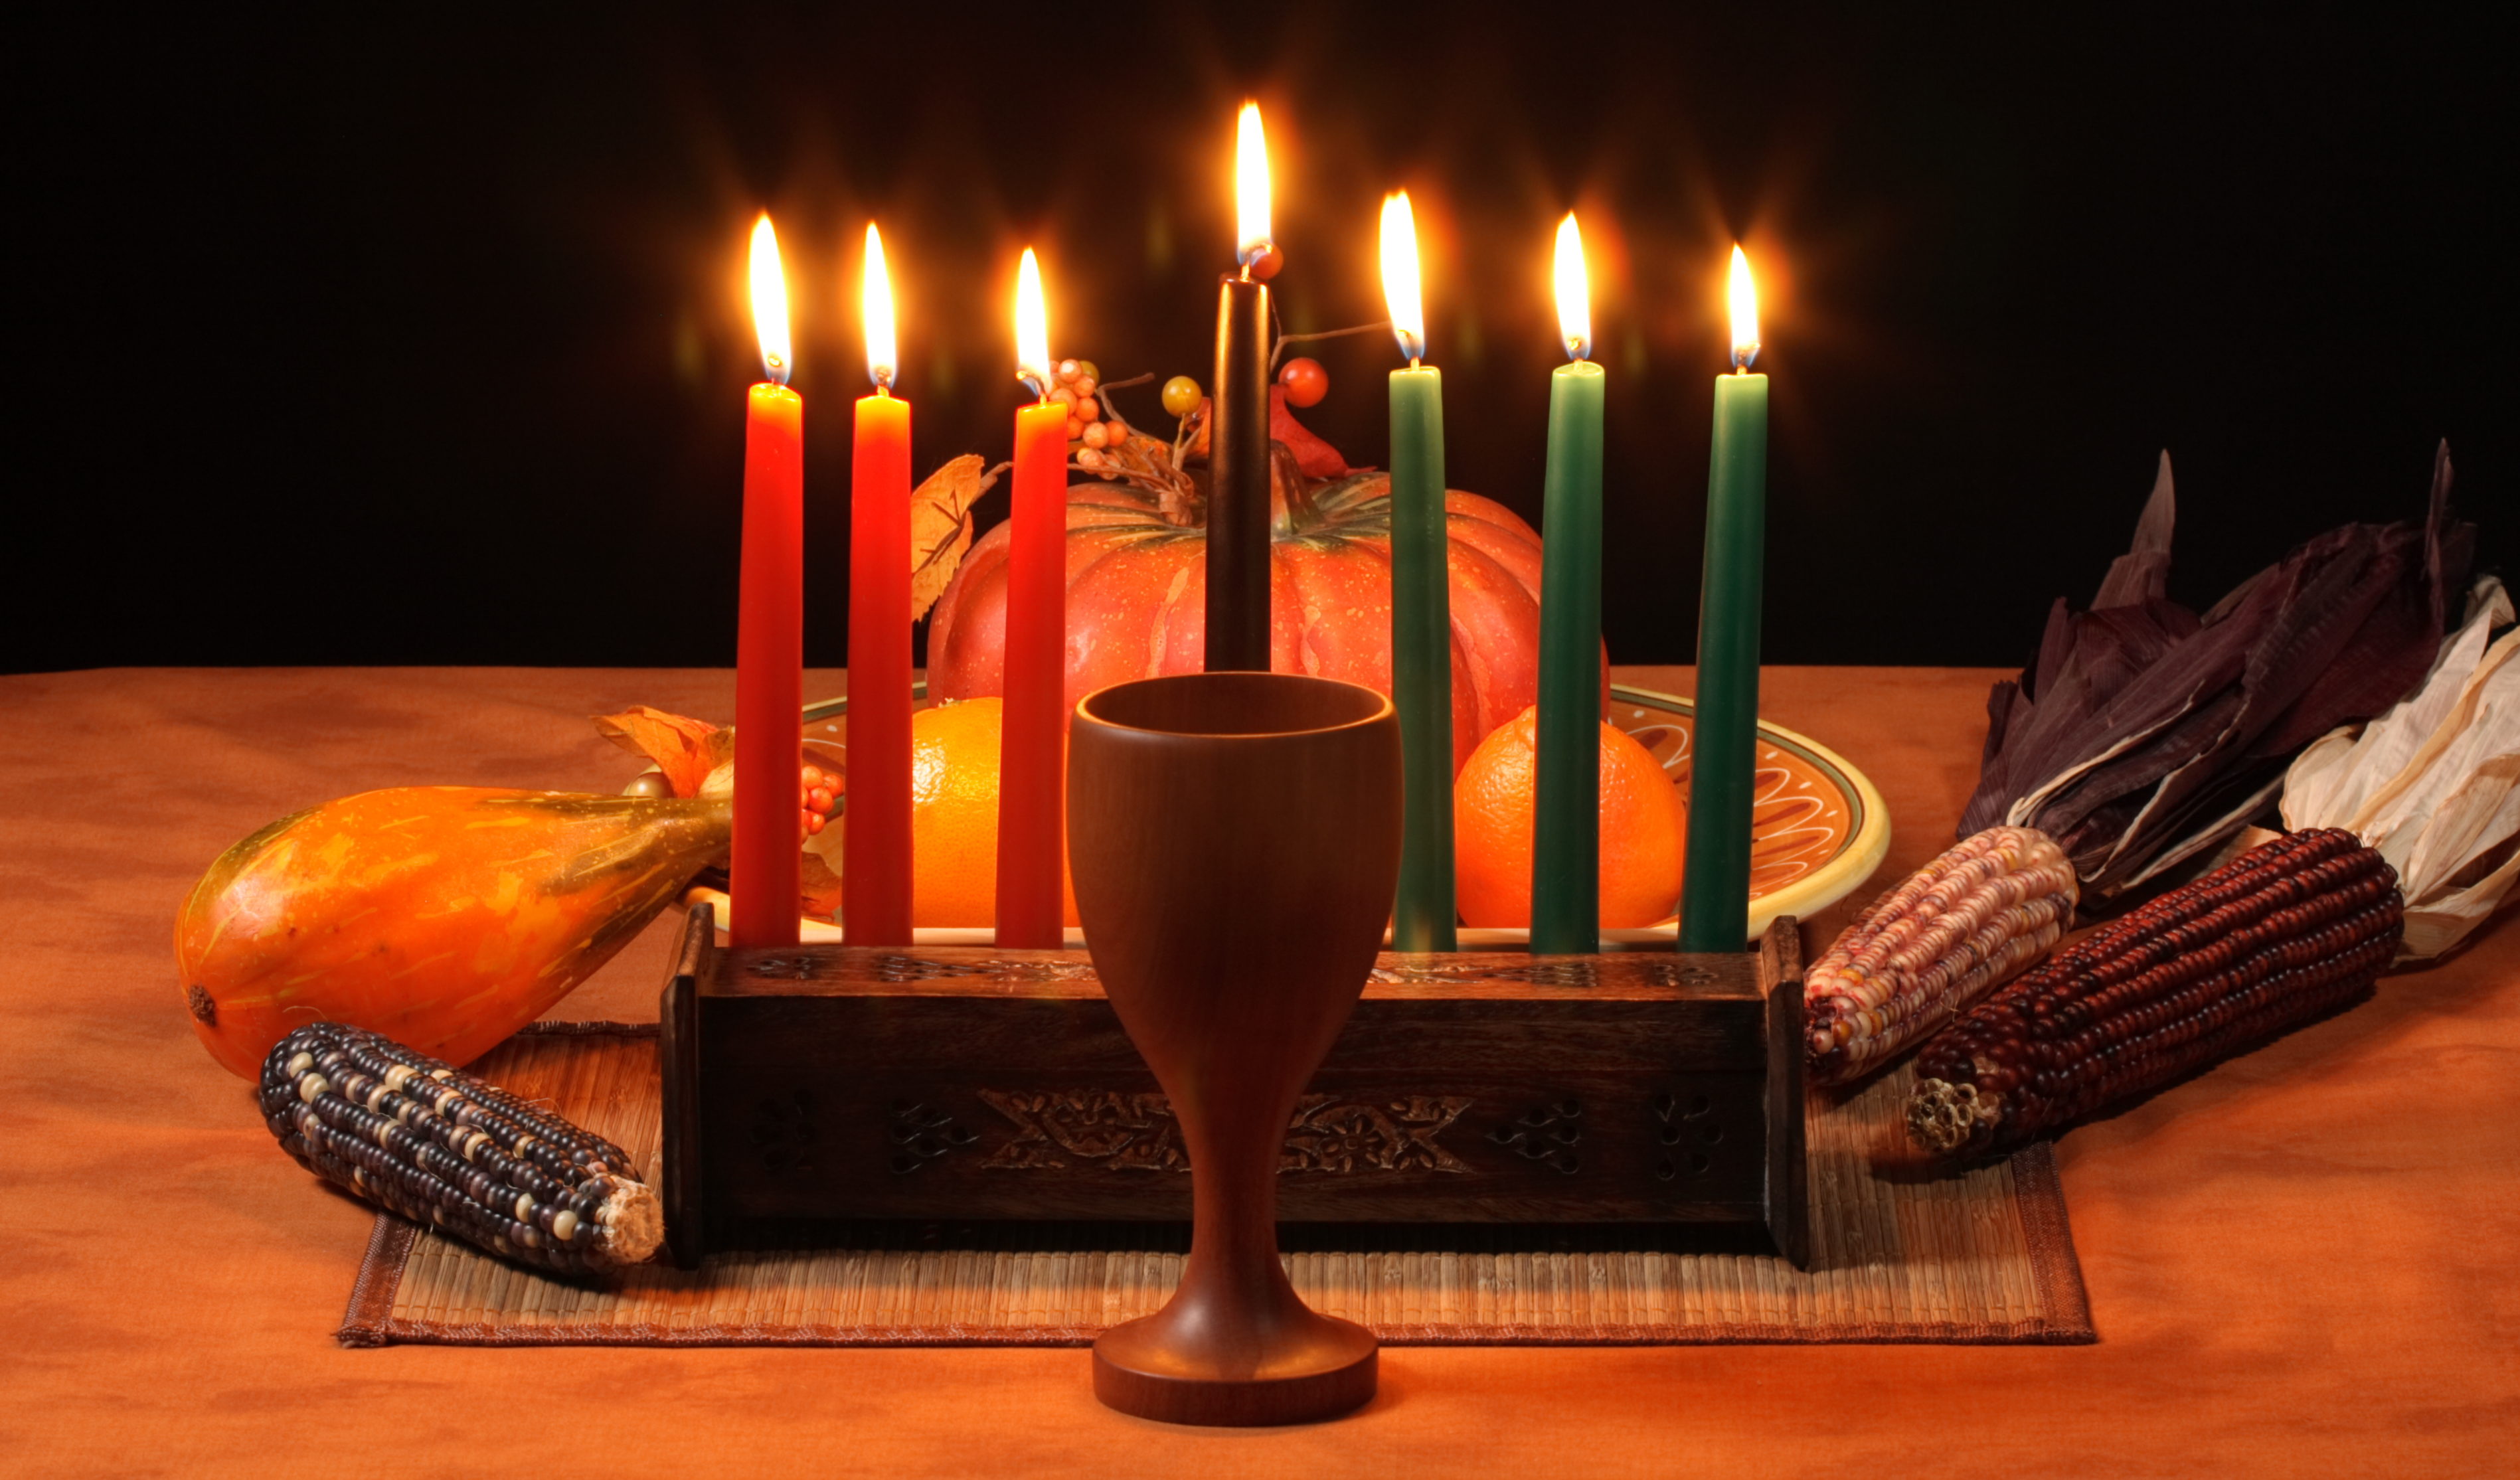 How to celebrate Kwanzaa and Hanukkah in Baton Rouge